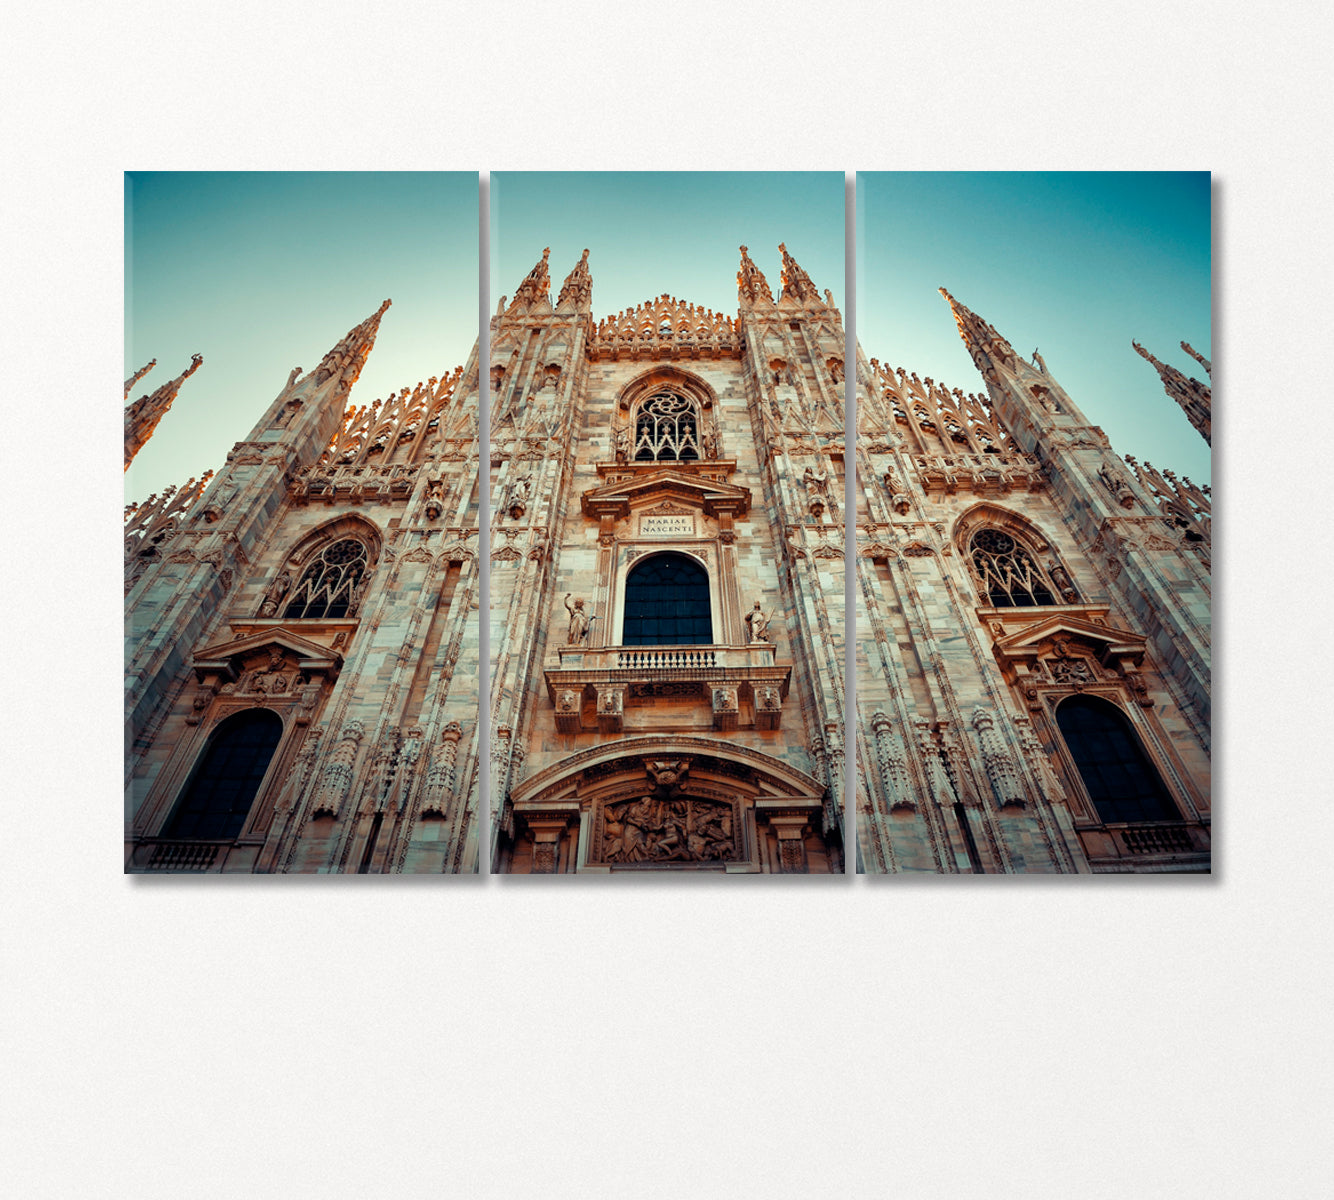 Splendor of Milan Cathedral Italy Canvas Print-Canvas Print-CetArt-3 Panels-36x24 inches-CetArt